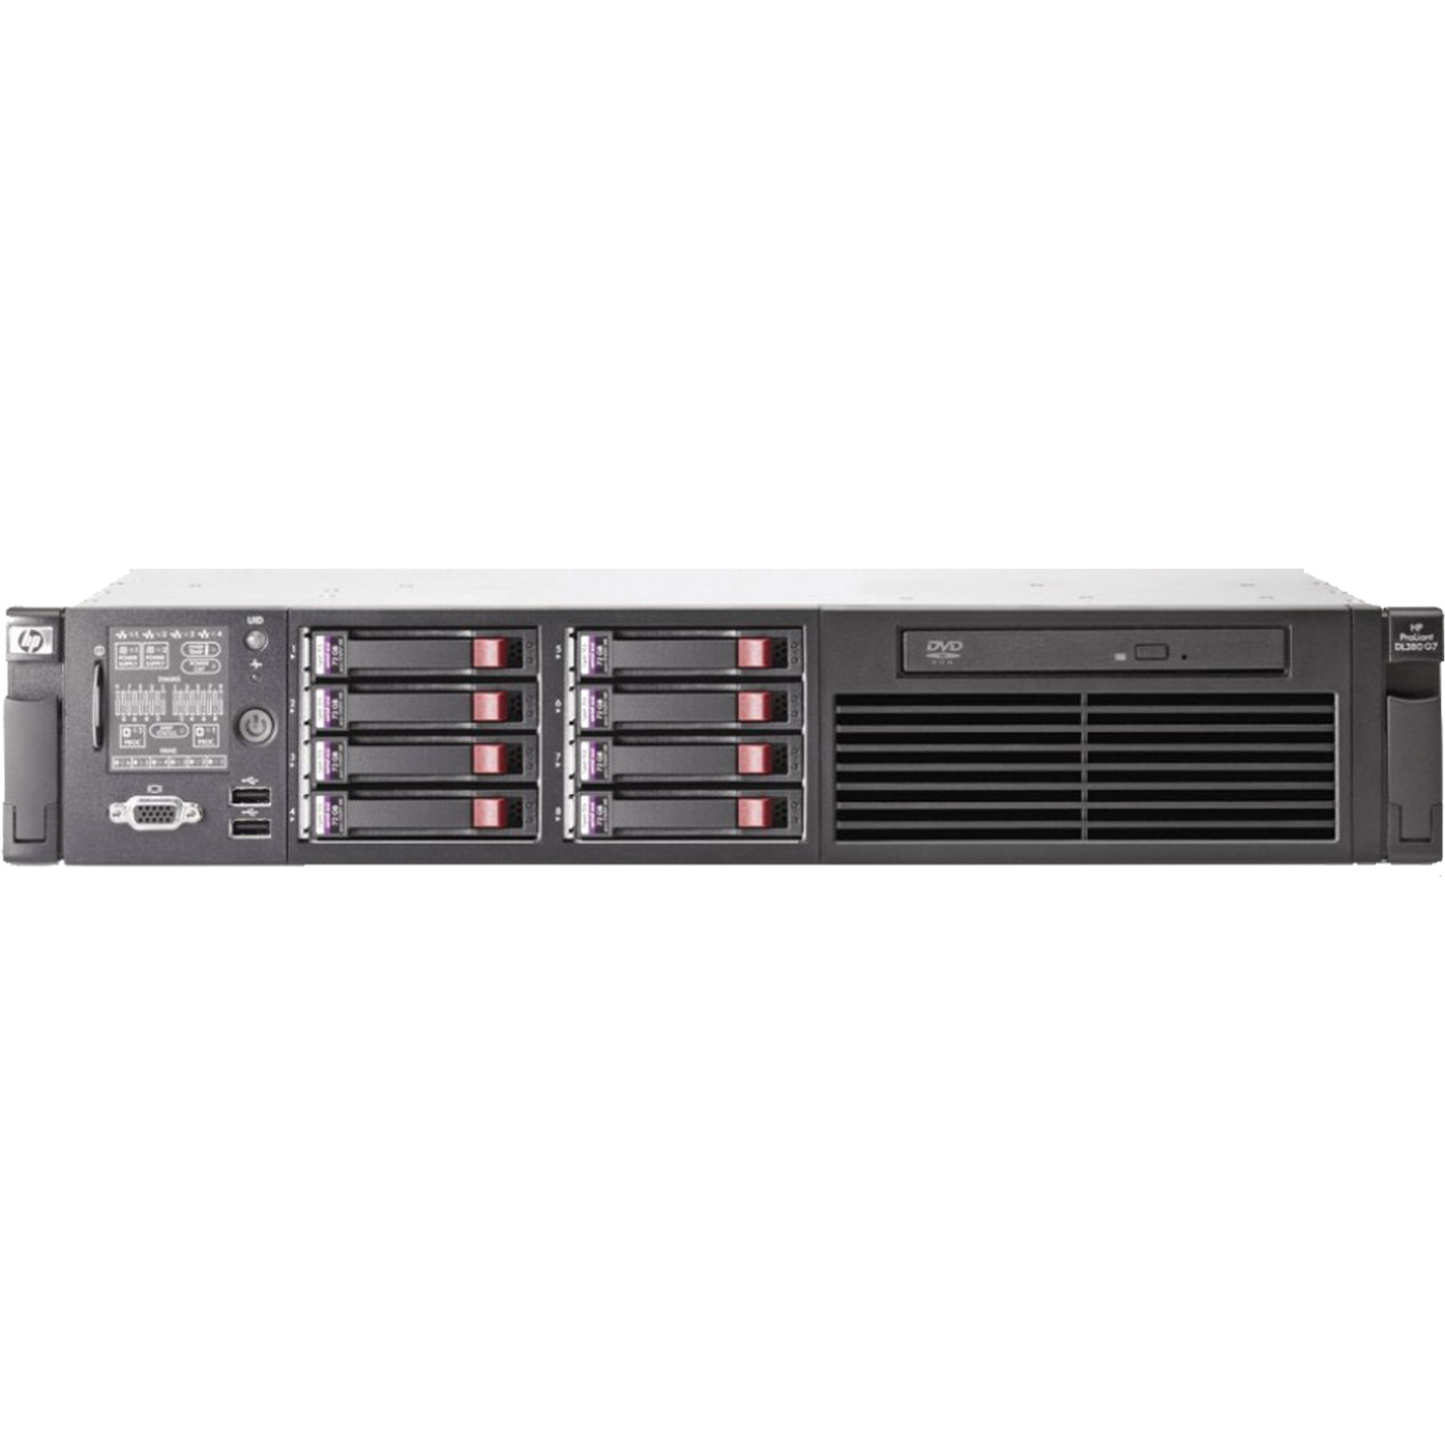 HP ProLiant DL380 G7 2 x 6 Core Intel Xeon CPU Server - 2.5" Backplane Servers